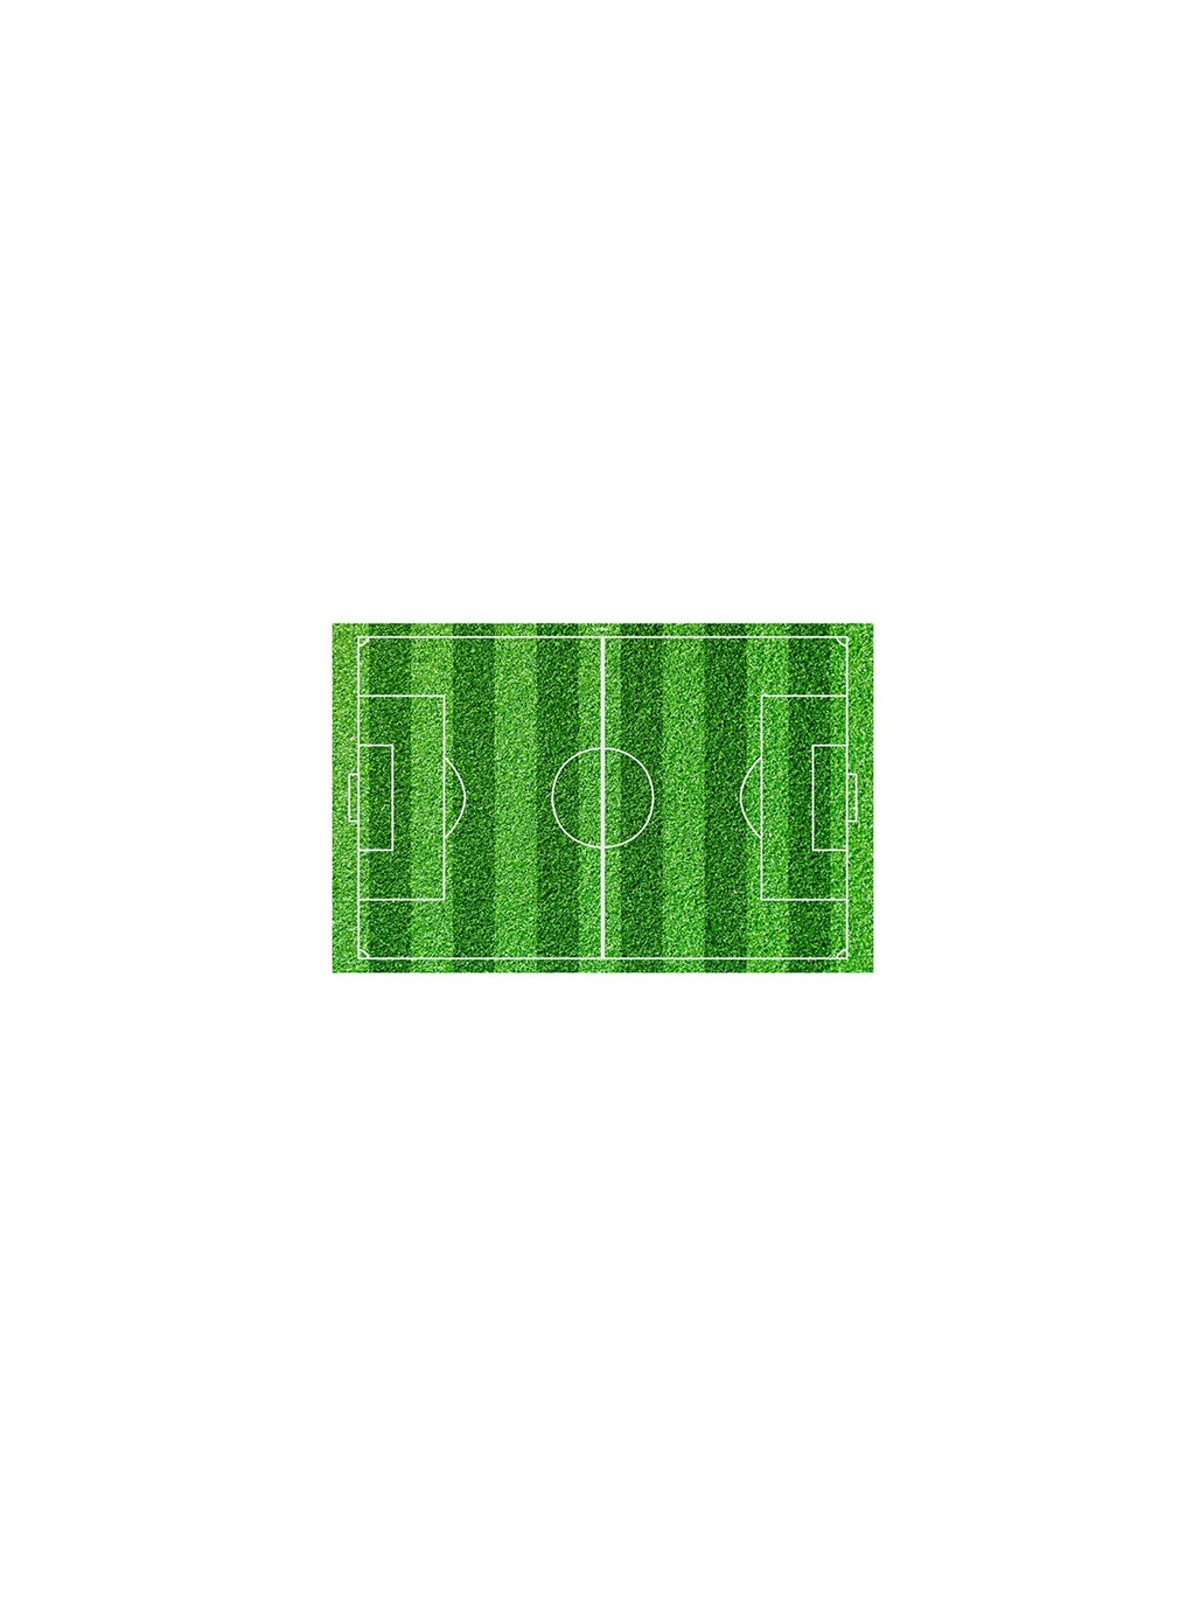 Dekora Edible paper rectangle - football field - 20 x 30cm  - 1pc